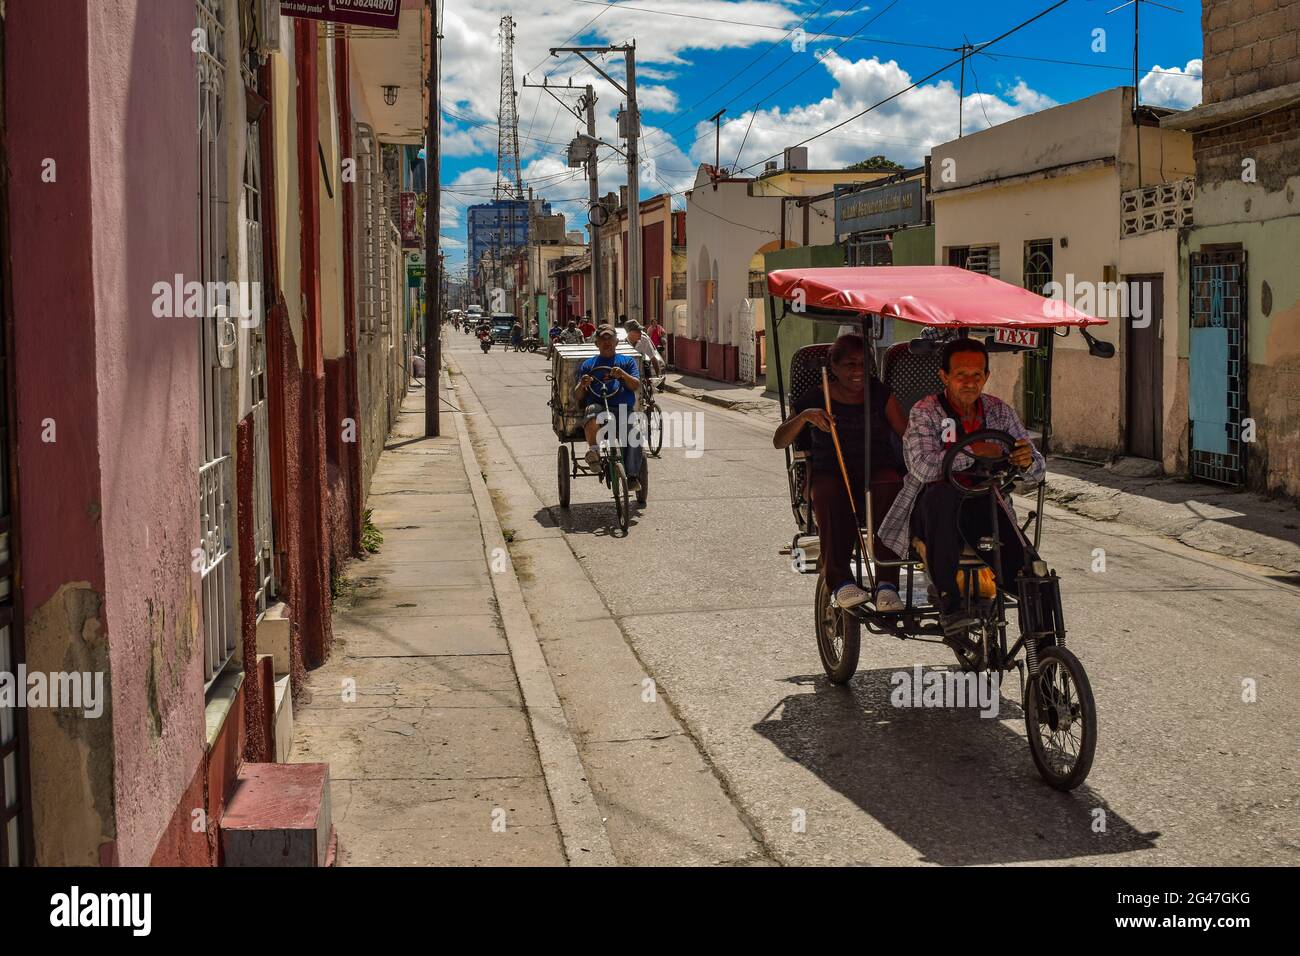 Bici-taxi driving down a backstreet in Holguin, Cuba Stock Photo